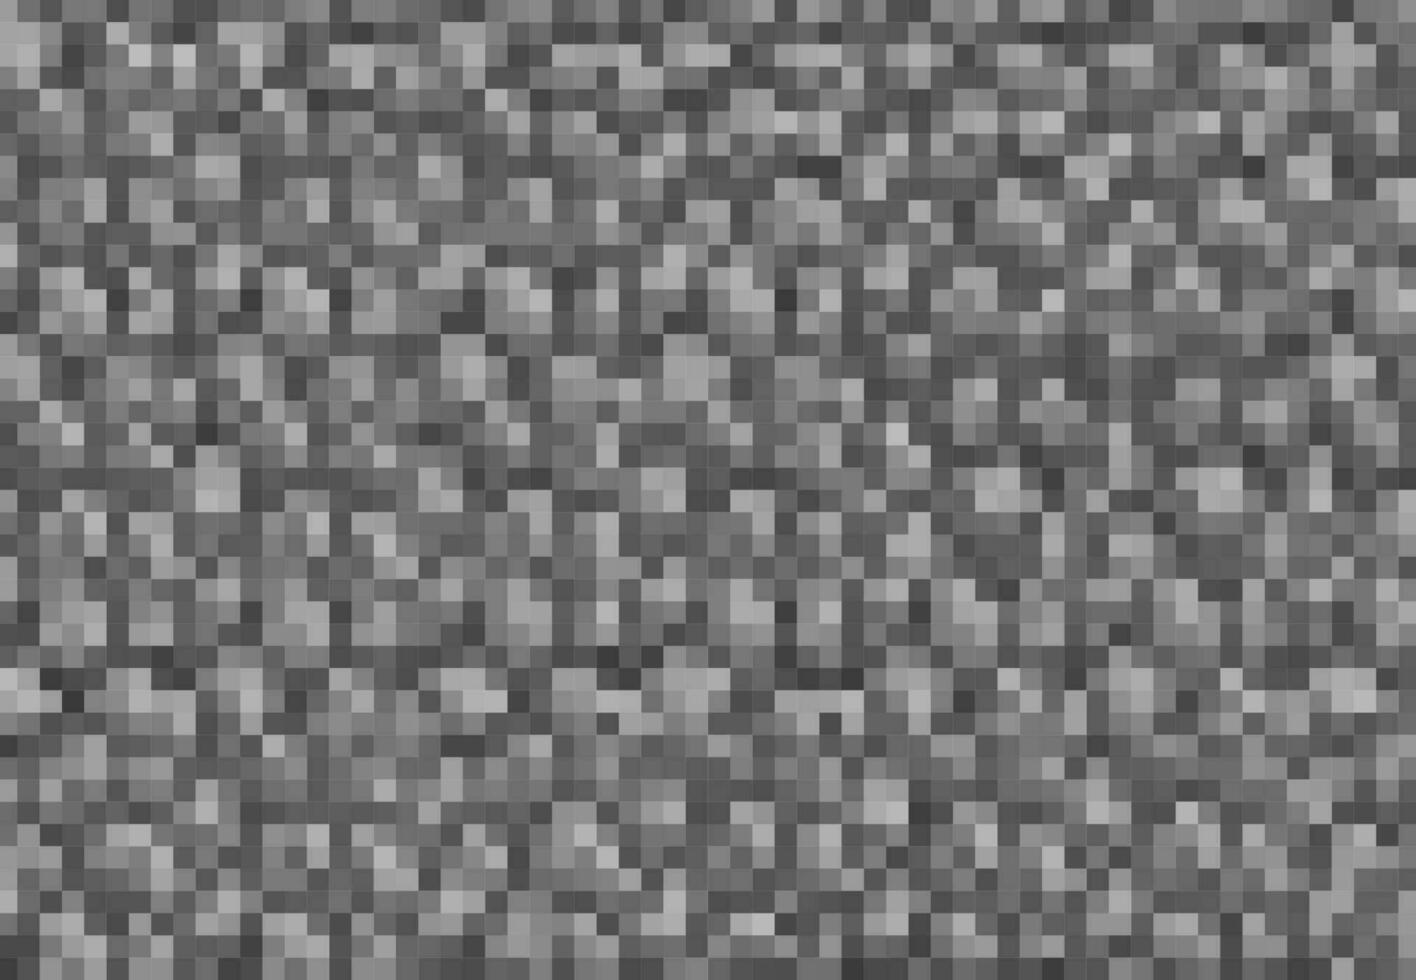 cúbico píxel juego gris rock piedras o escombros grava vector